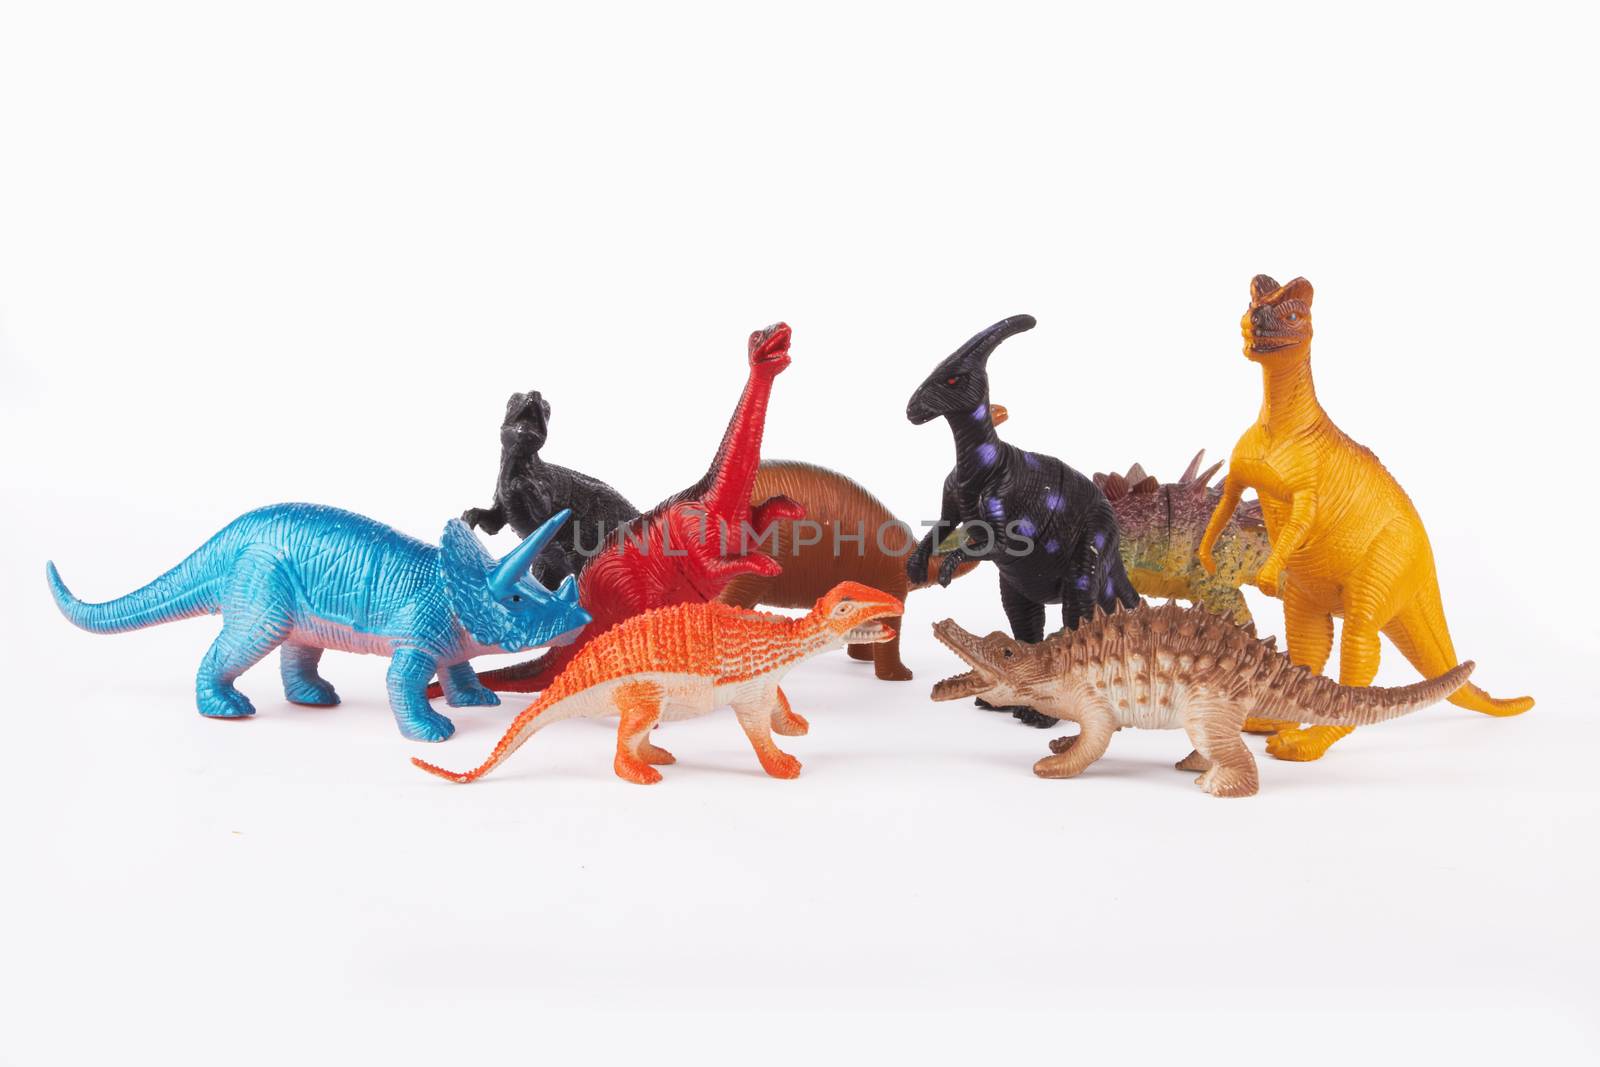 Toy dinosaurs on white background 